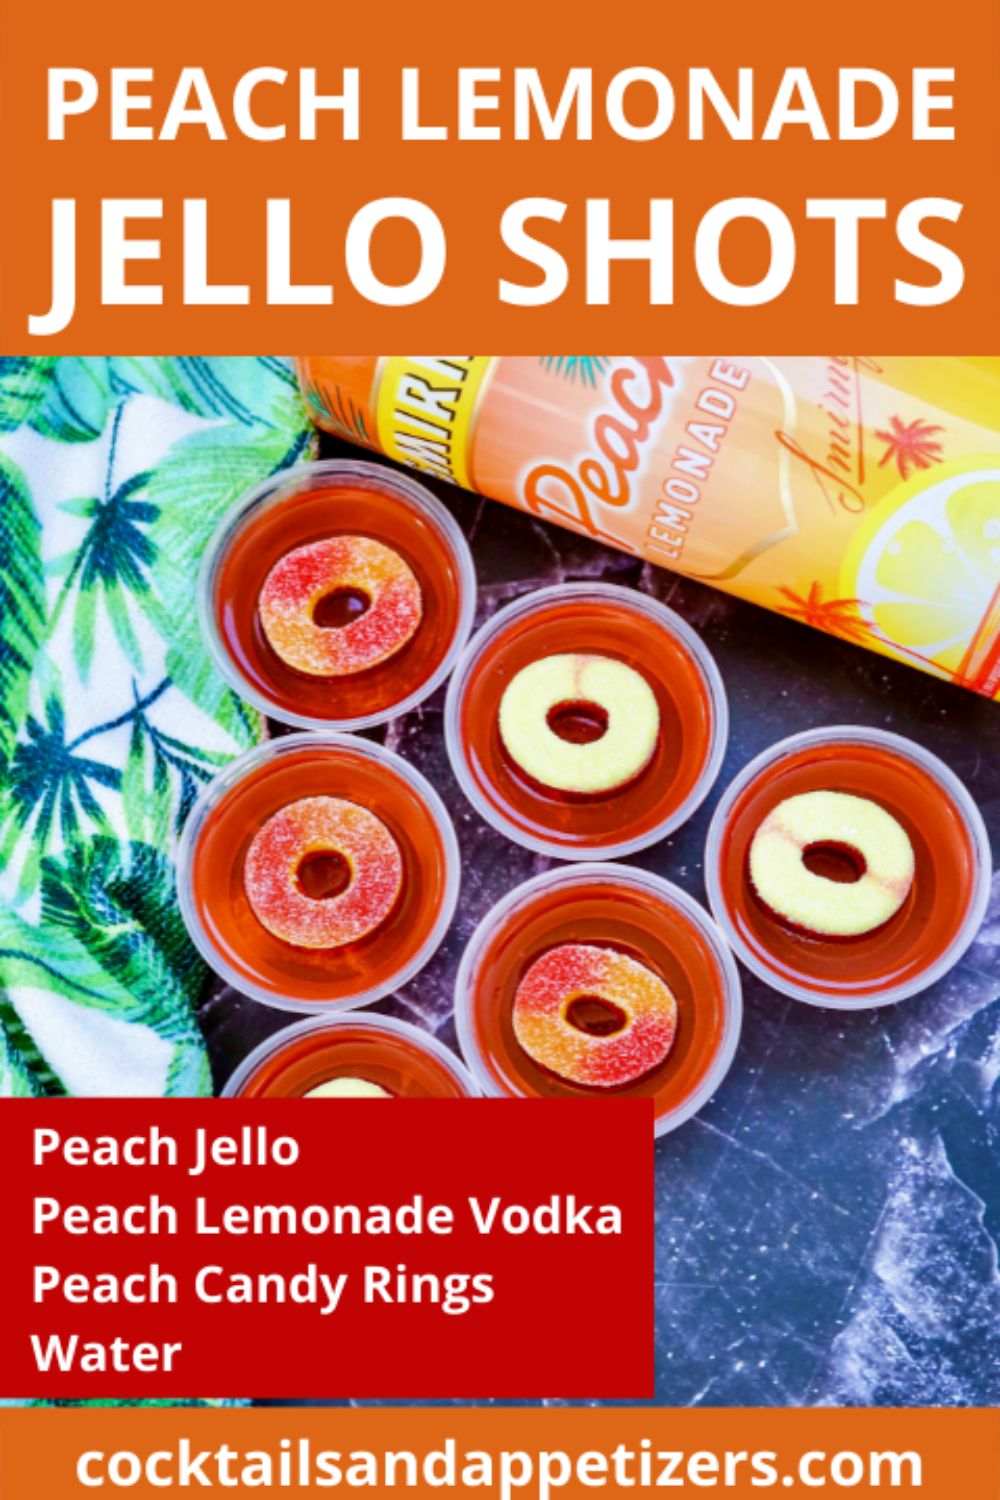 Smirnoff Peach Lemonade Jello Shots with peach ring garnish in shot cups.